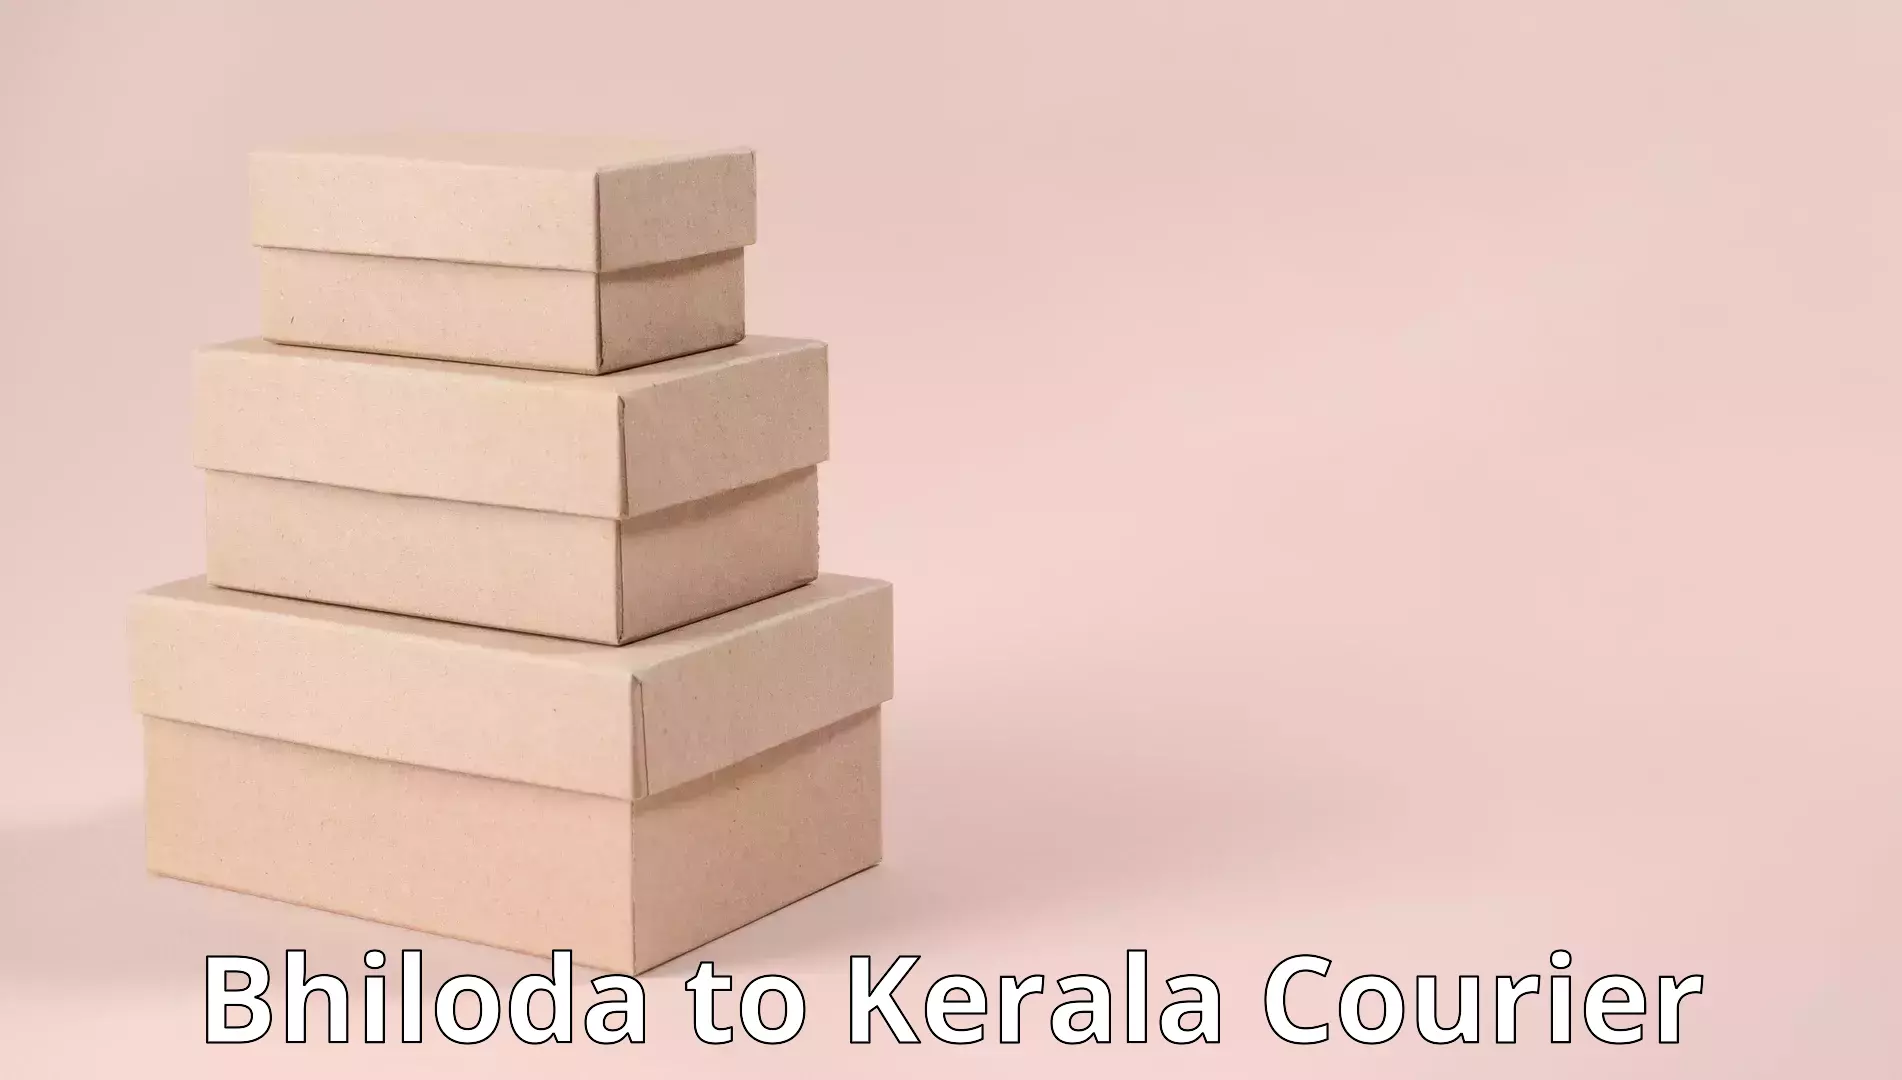 Furniture relocation experts Bhiloda to Kerala